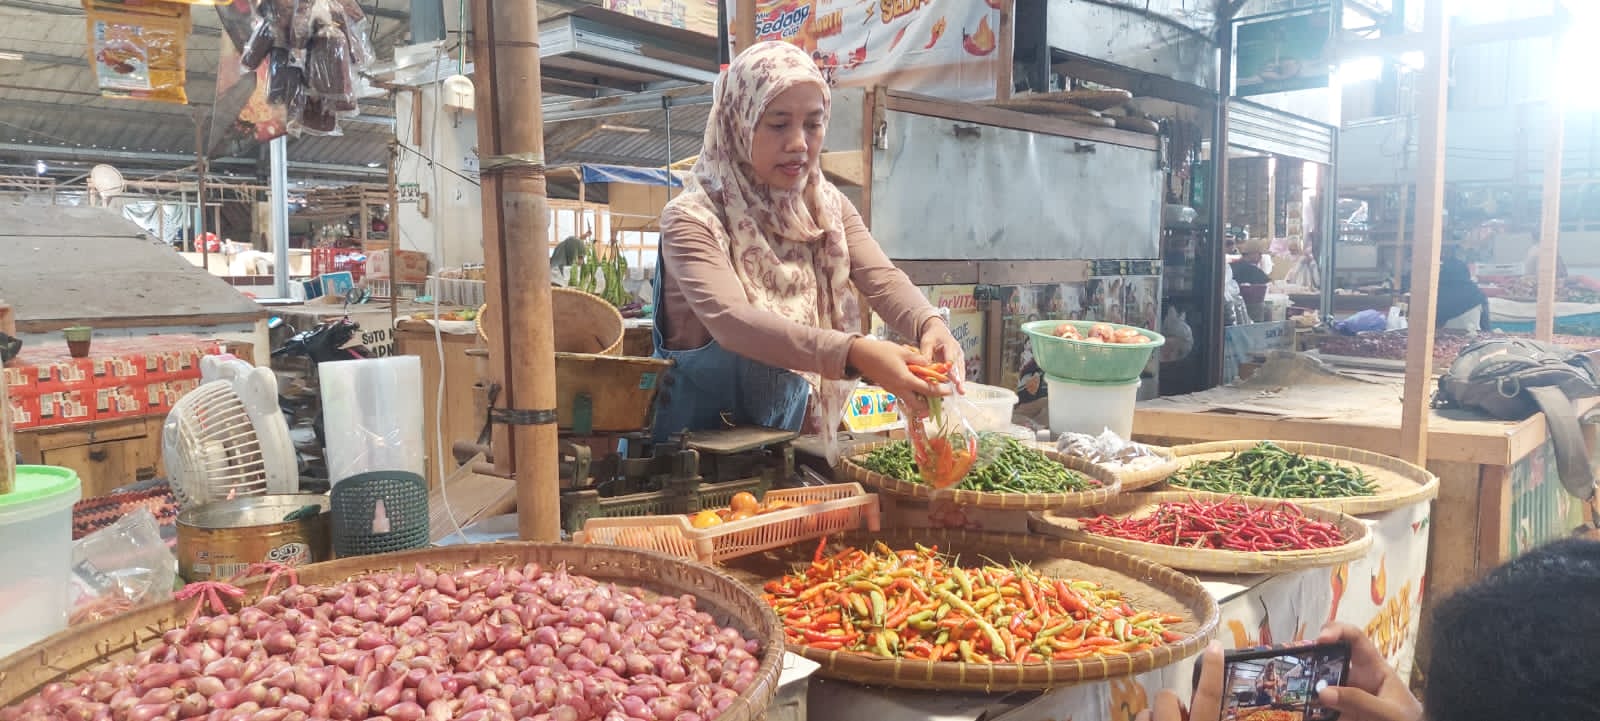 Harga Cabai, Bawang hingga Daging Ayam Naik, Tomat Turun di Kabupaten Tegal 